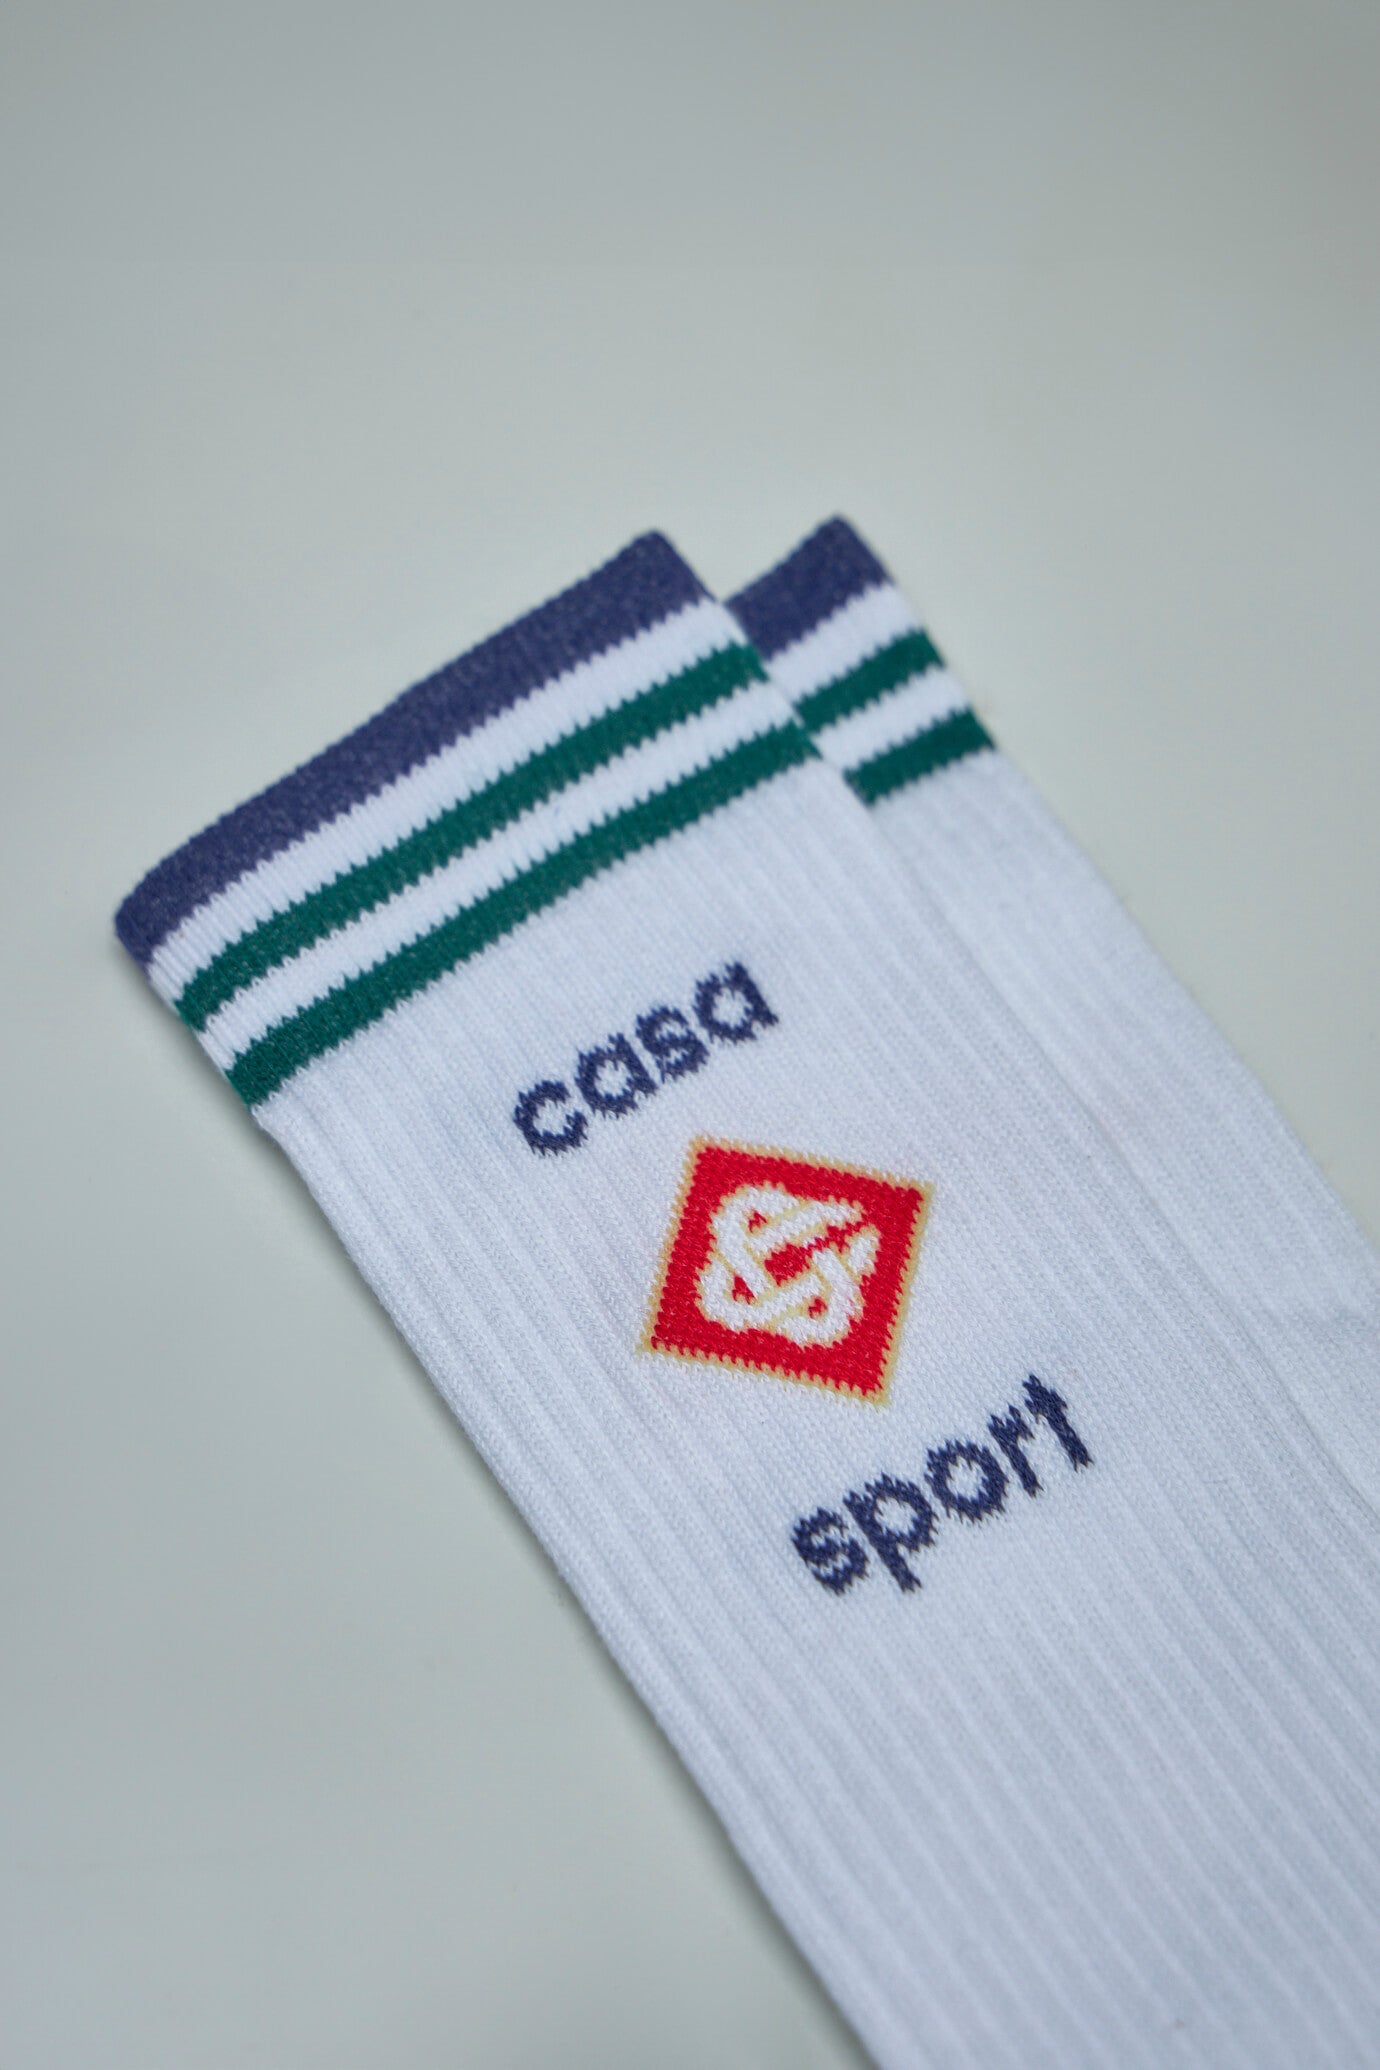 Mid Calf Ribbed Sport Sock